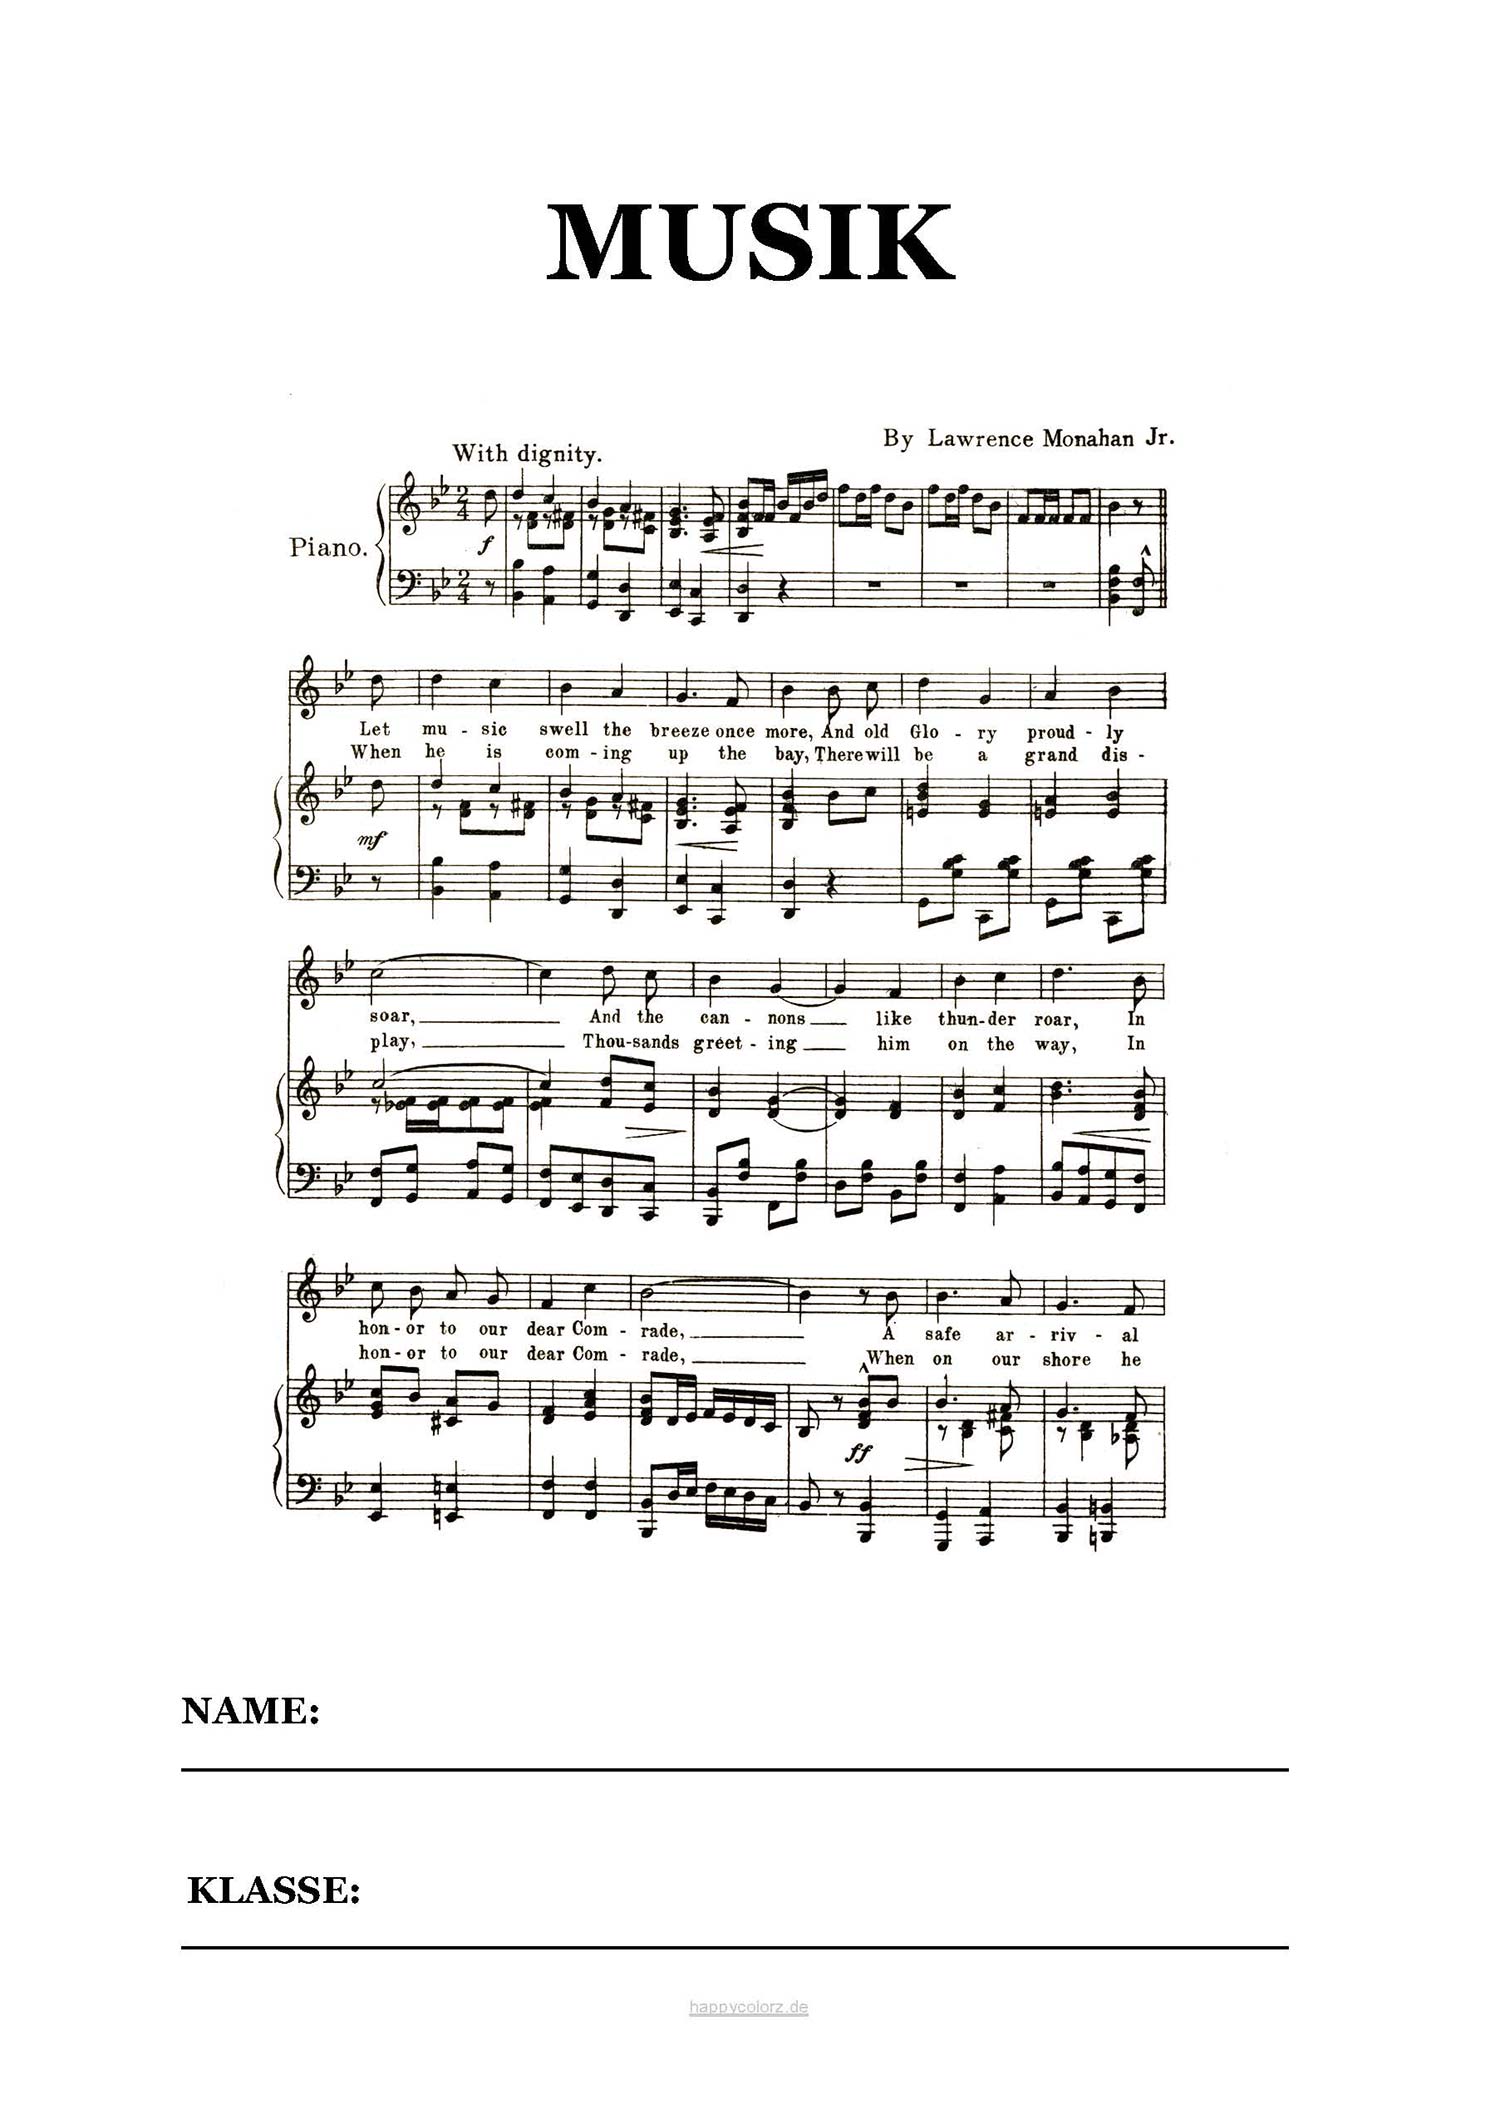 Deckblatt Musik mit Notenblatt kostenlos ausdrucken (pdf)